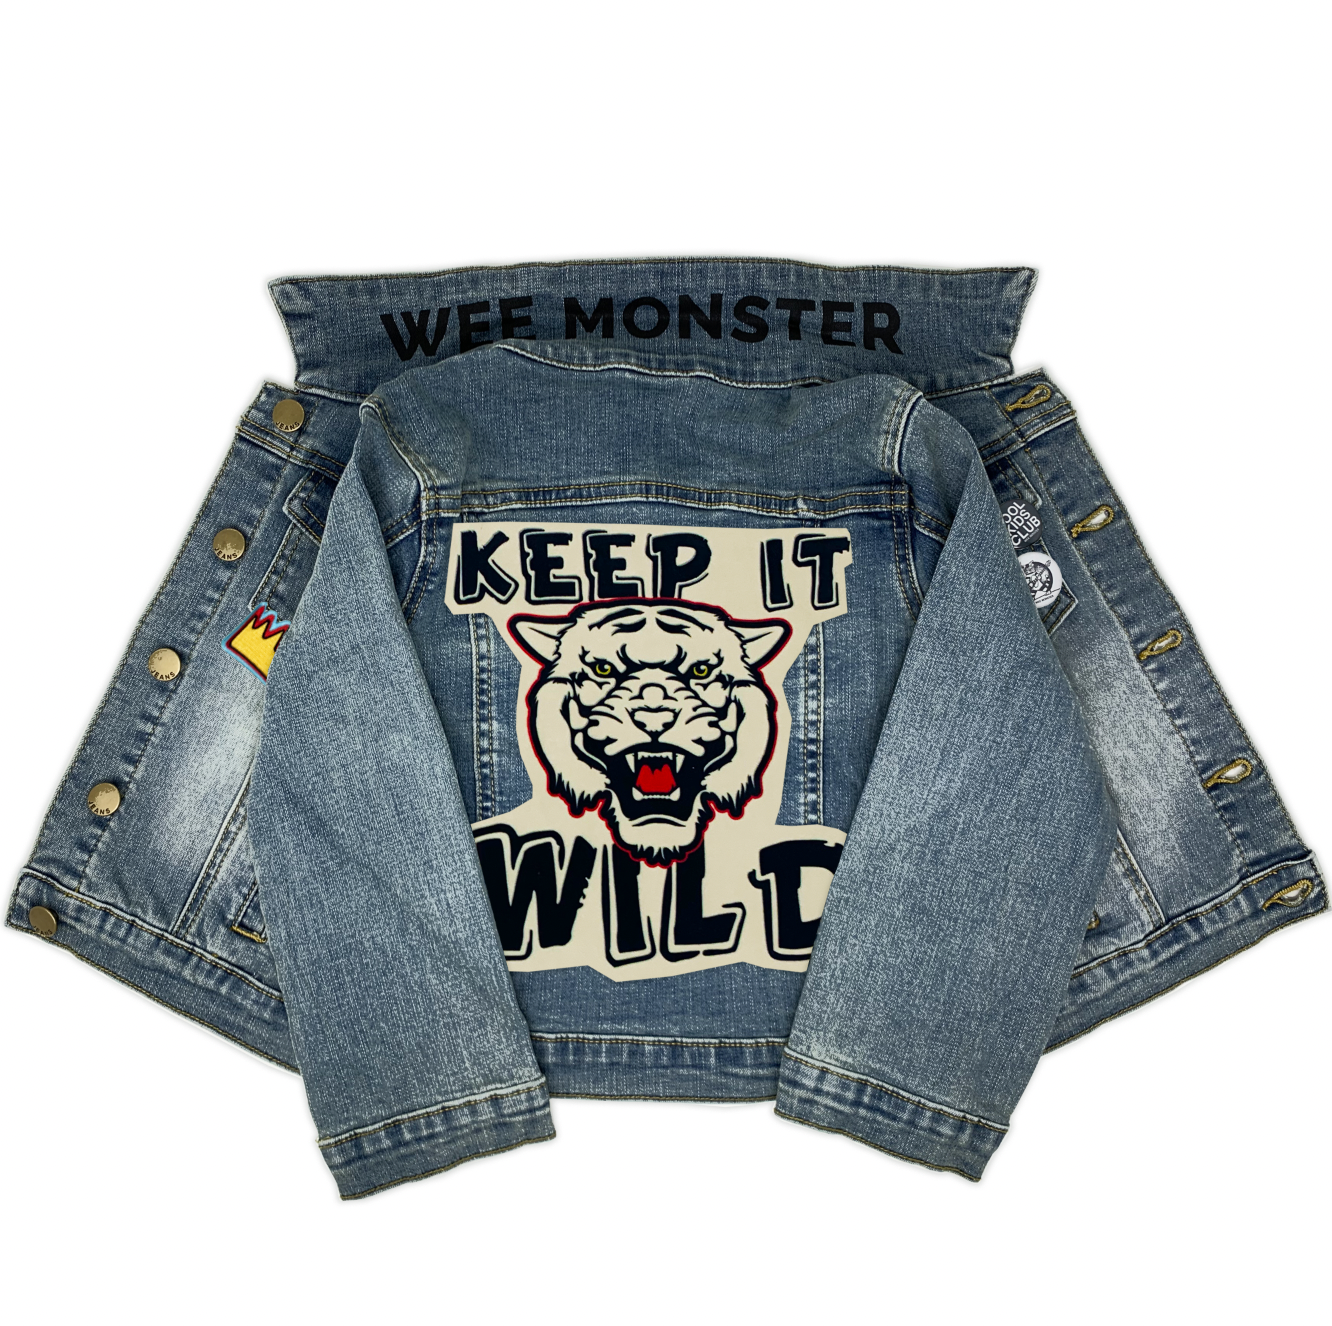 Keep It Wild Denim Jacket - Unisex for Boys and Girls